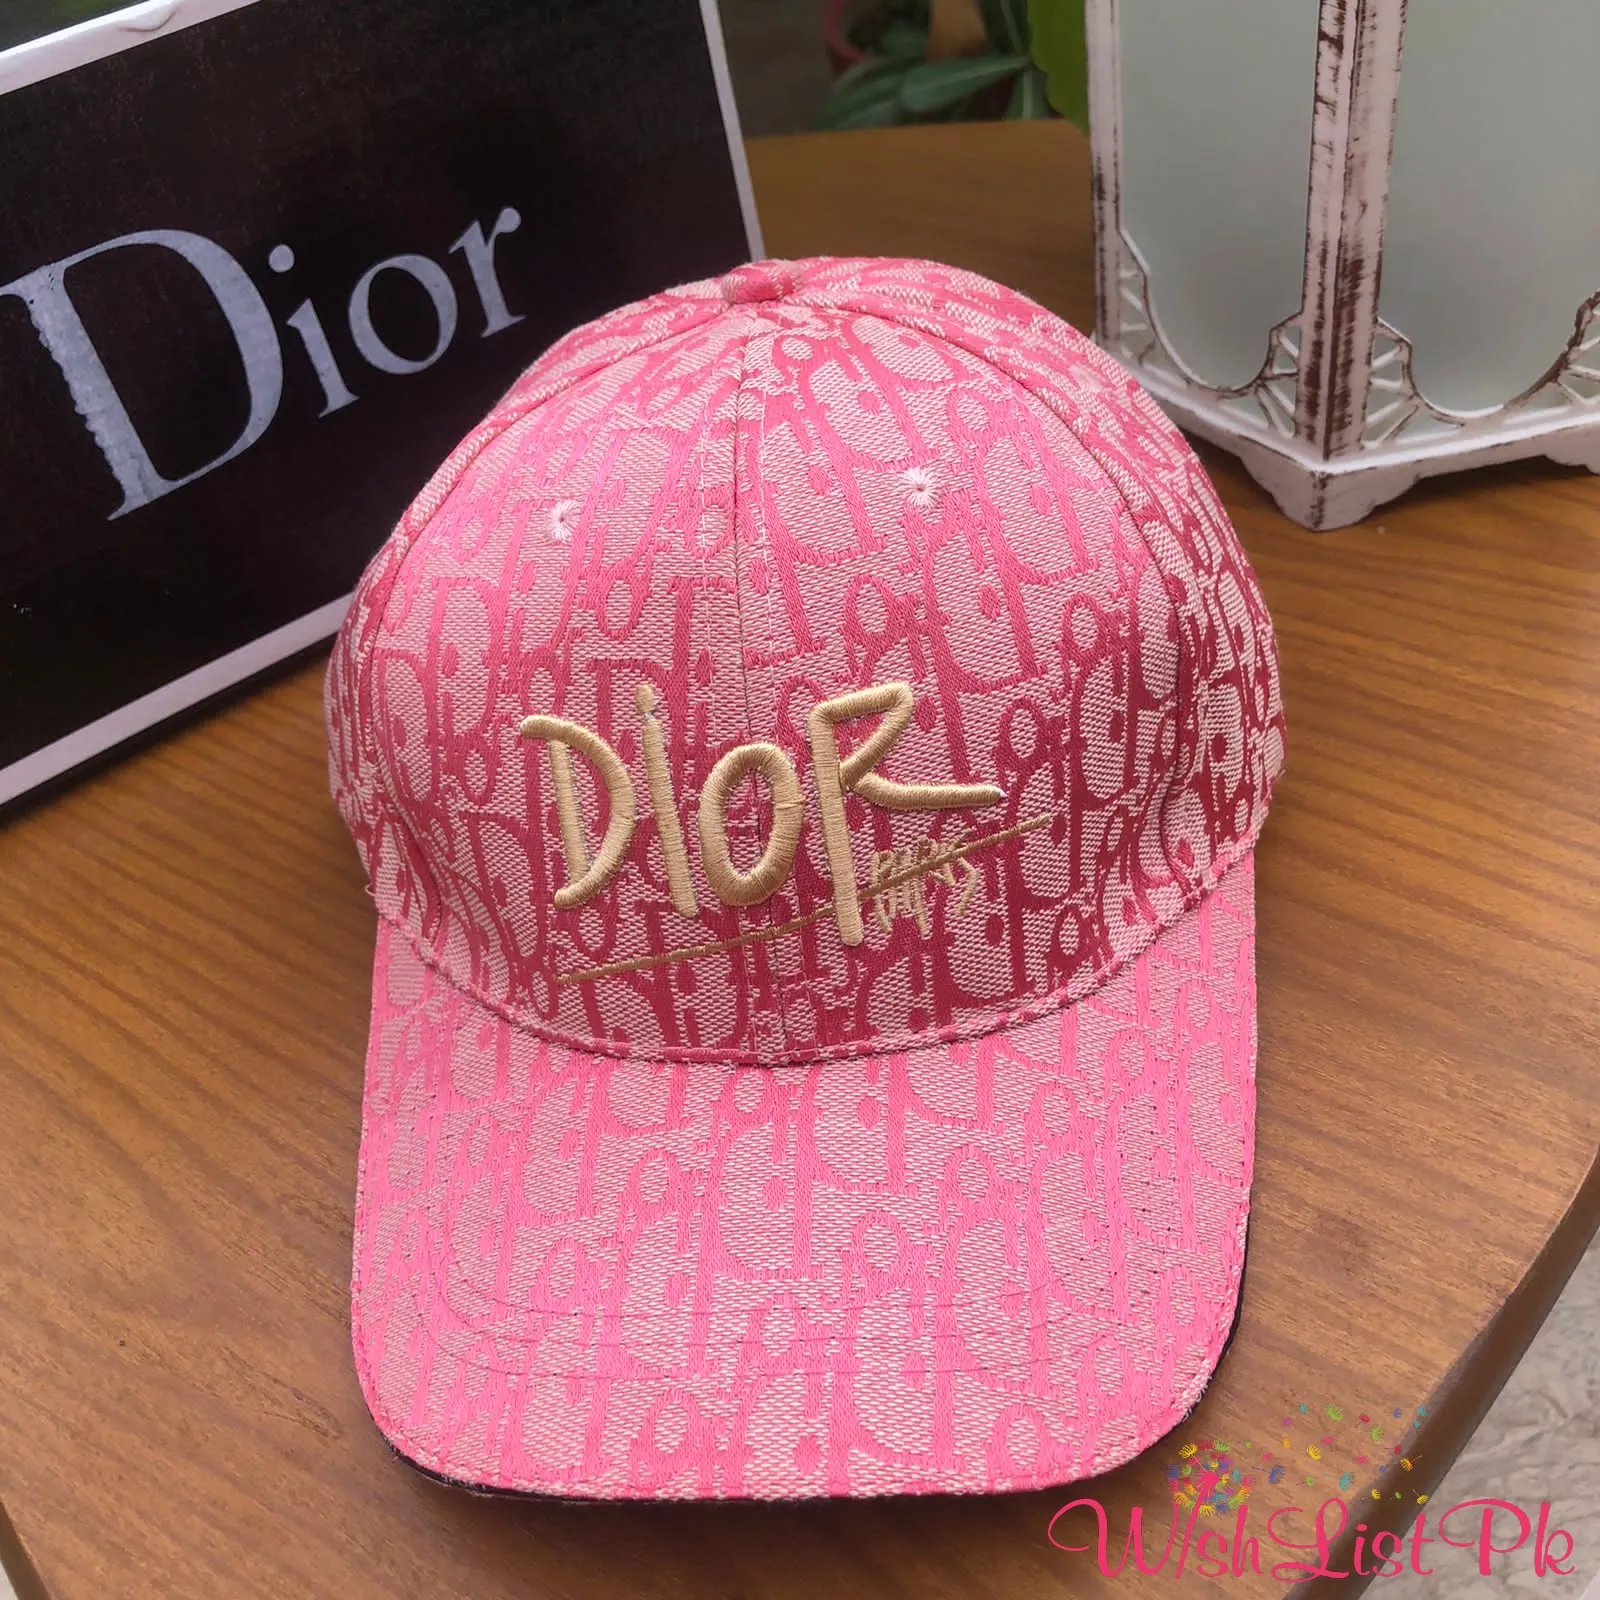 Best Price Dior Pink Cap